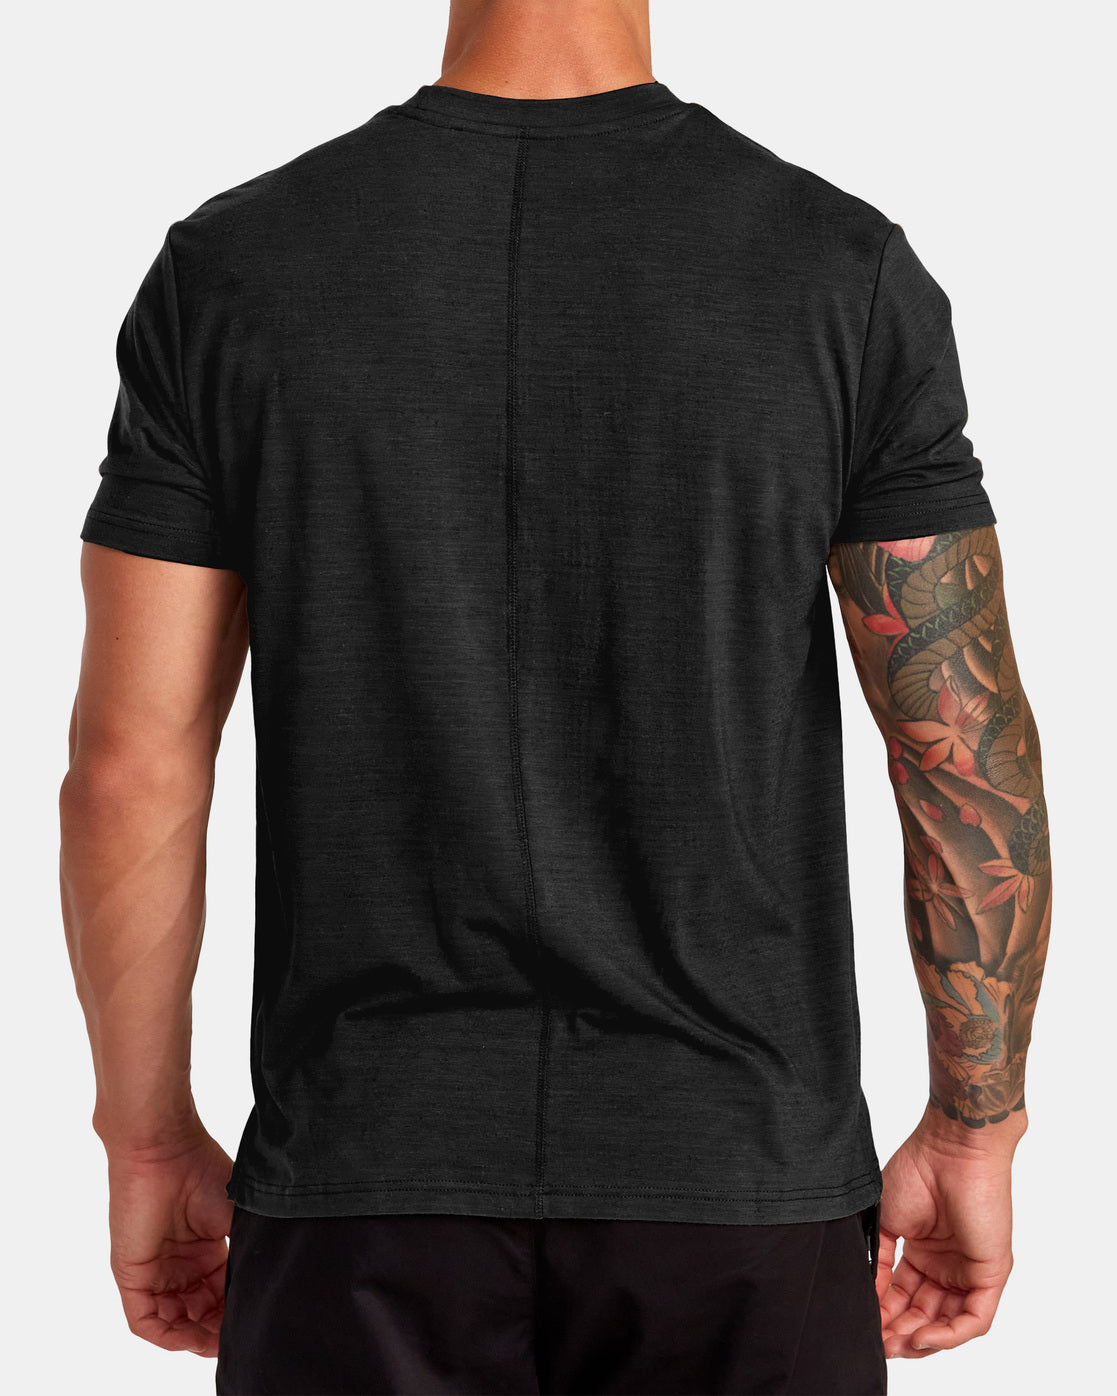 Balance Collection Stripes Black Short Sleeve T-Shirt Size M - 68